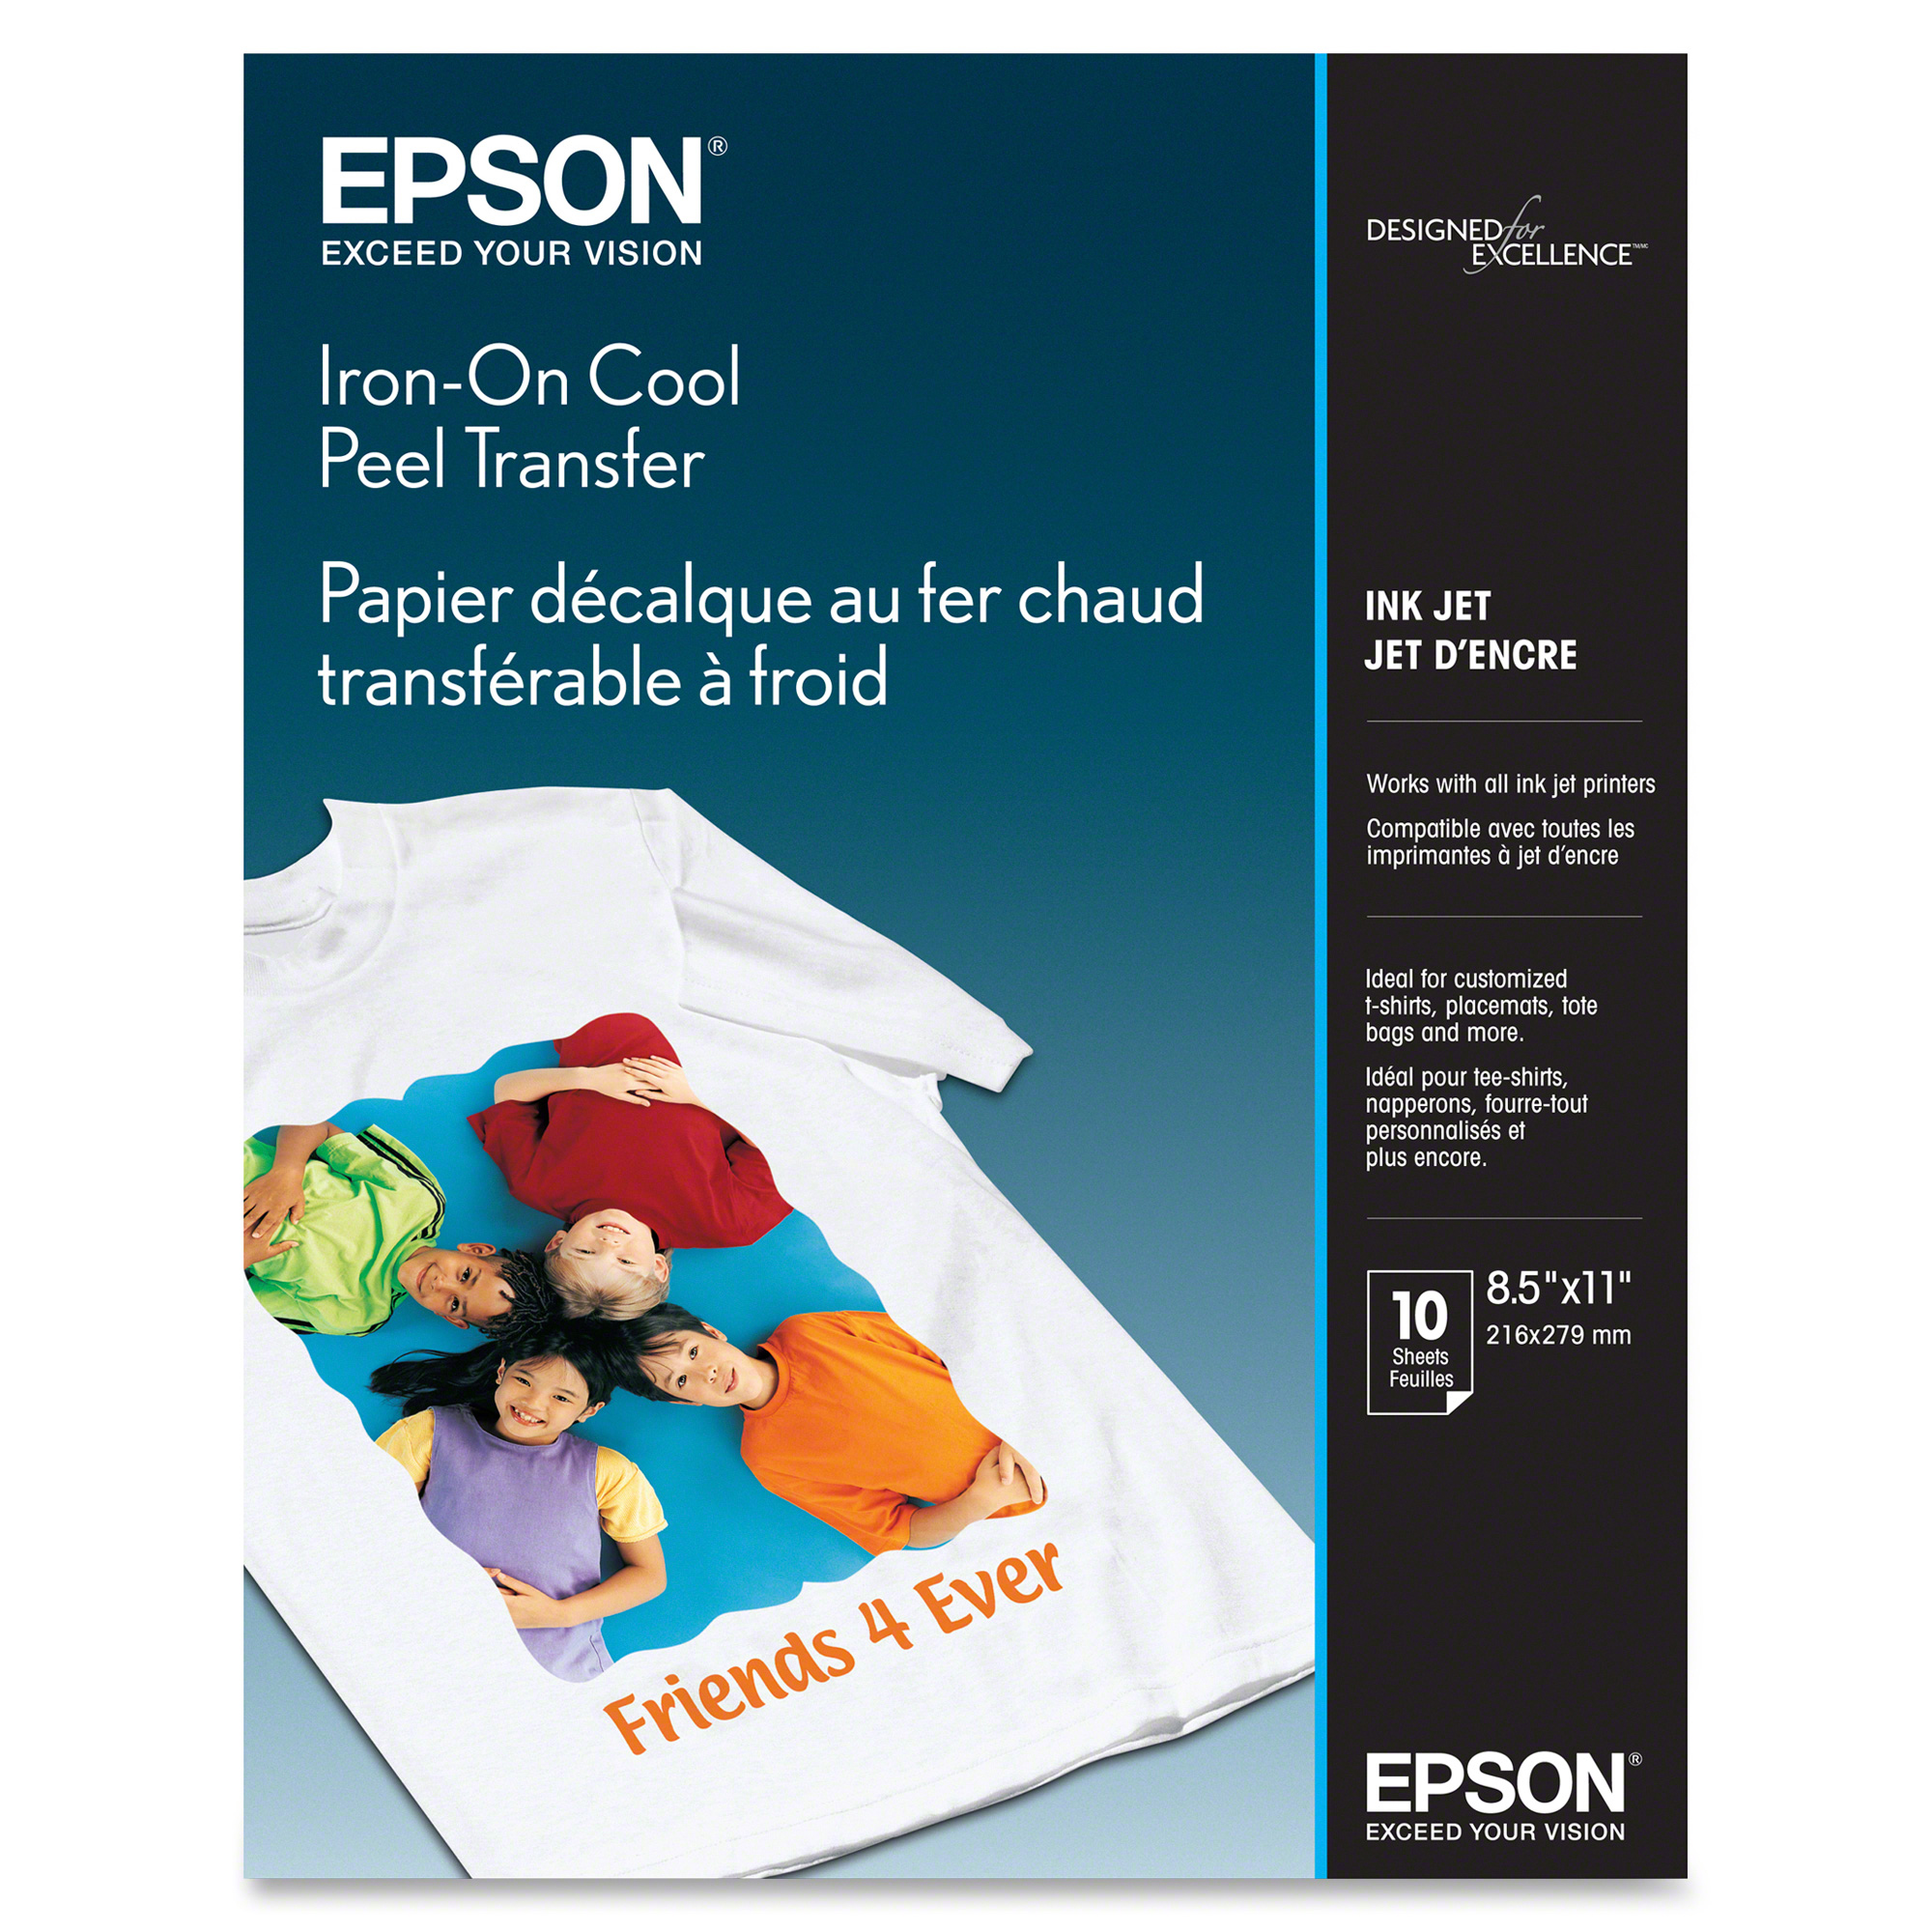 Epson iron-on transfer 10 shts 8.5 x 11 - image 2 of 2